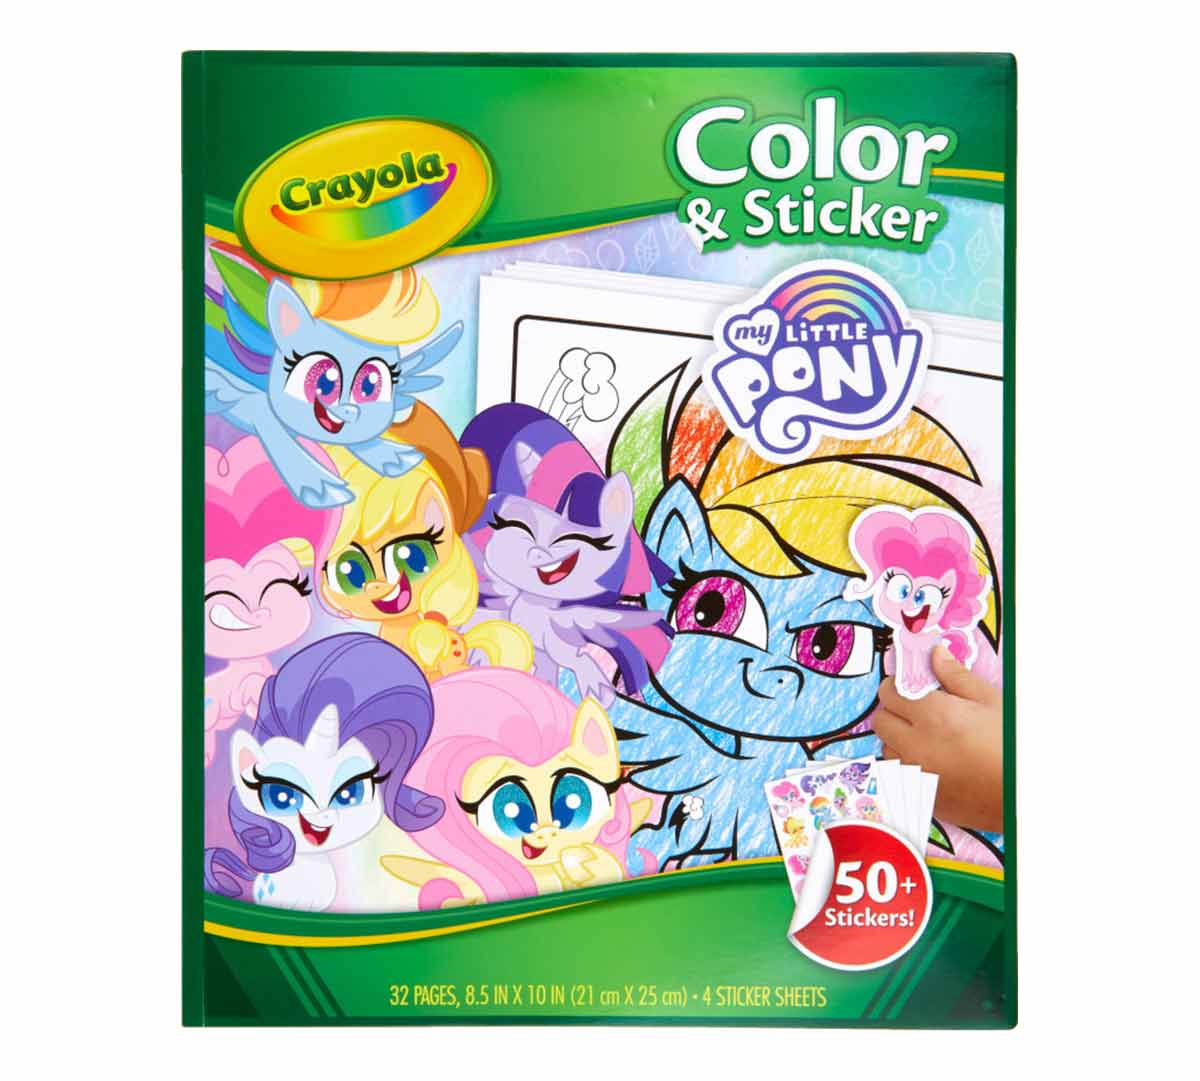 https://shop.crayola.com/on/demandware.static/-/Sites-crayola-storefront/default/dw5efd6409/images/04-2631-0-960_Color-&-Sticker_My-Little-Pony_F1.jpg